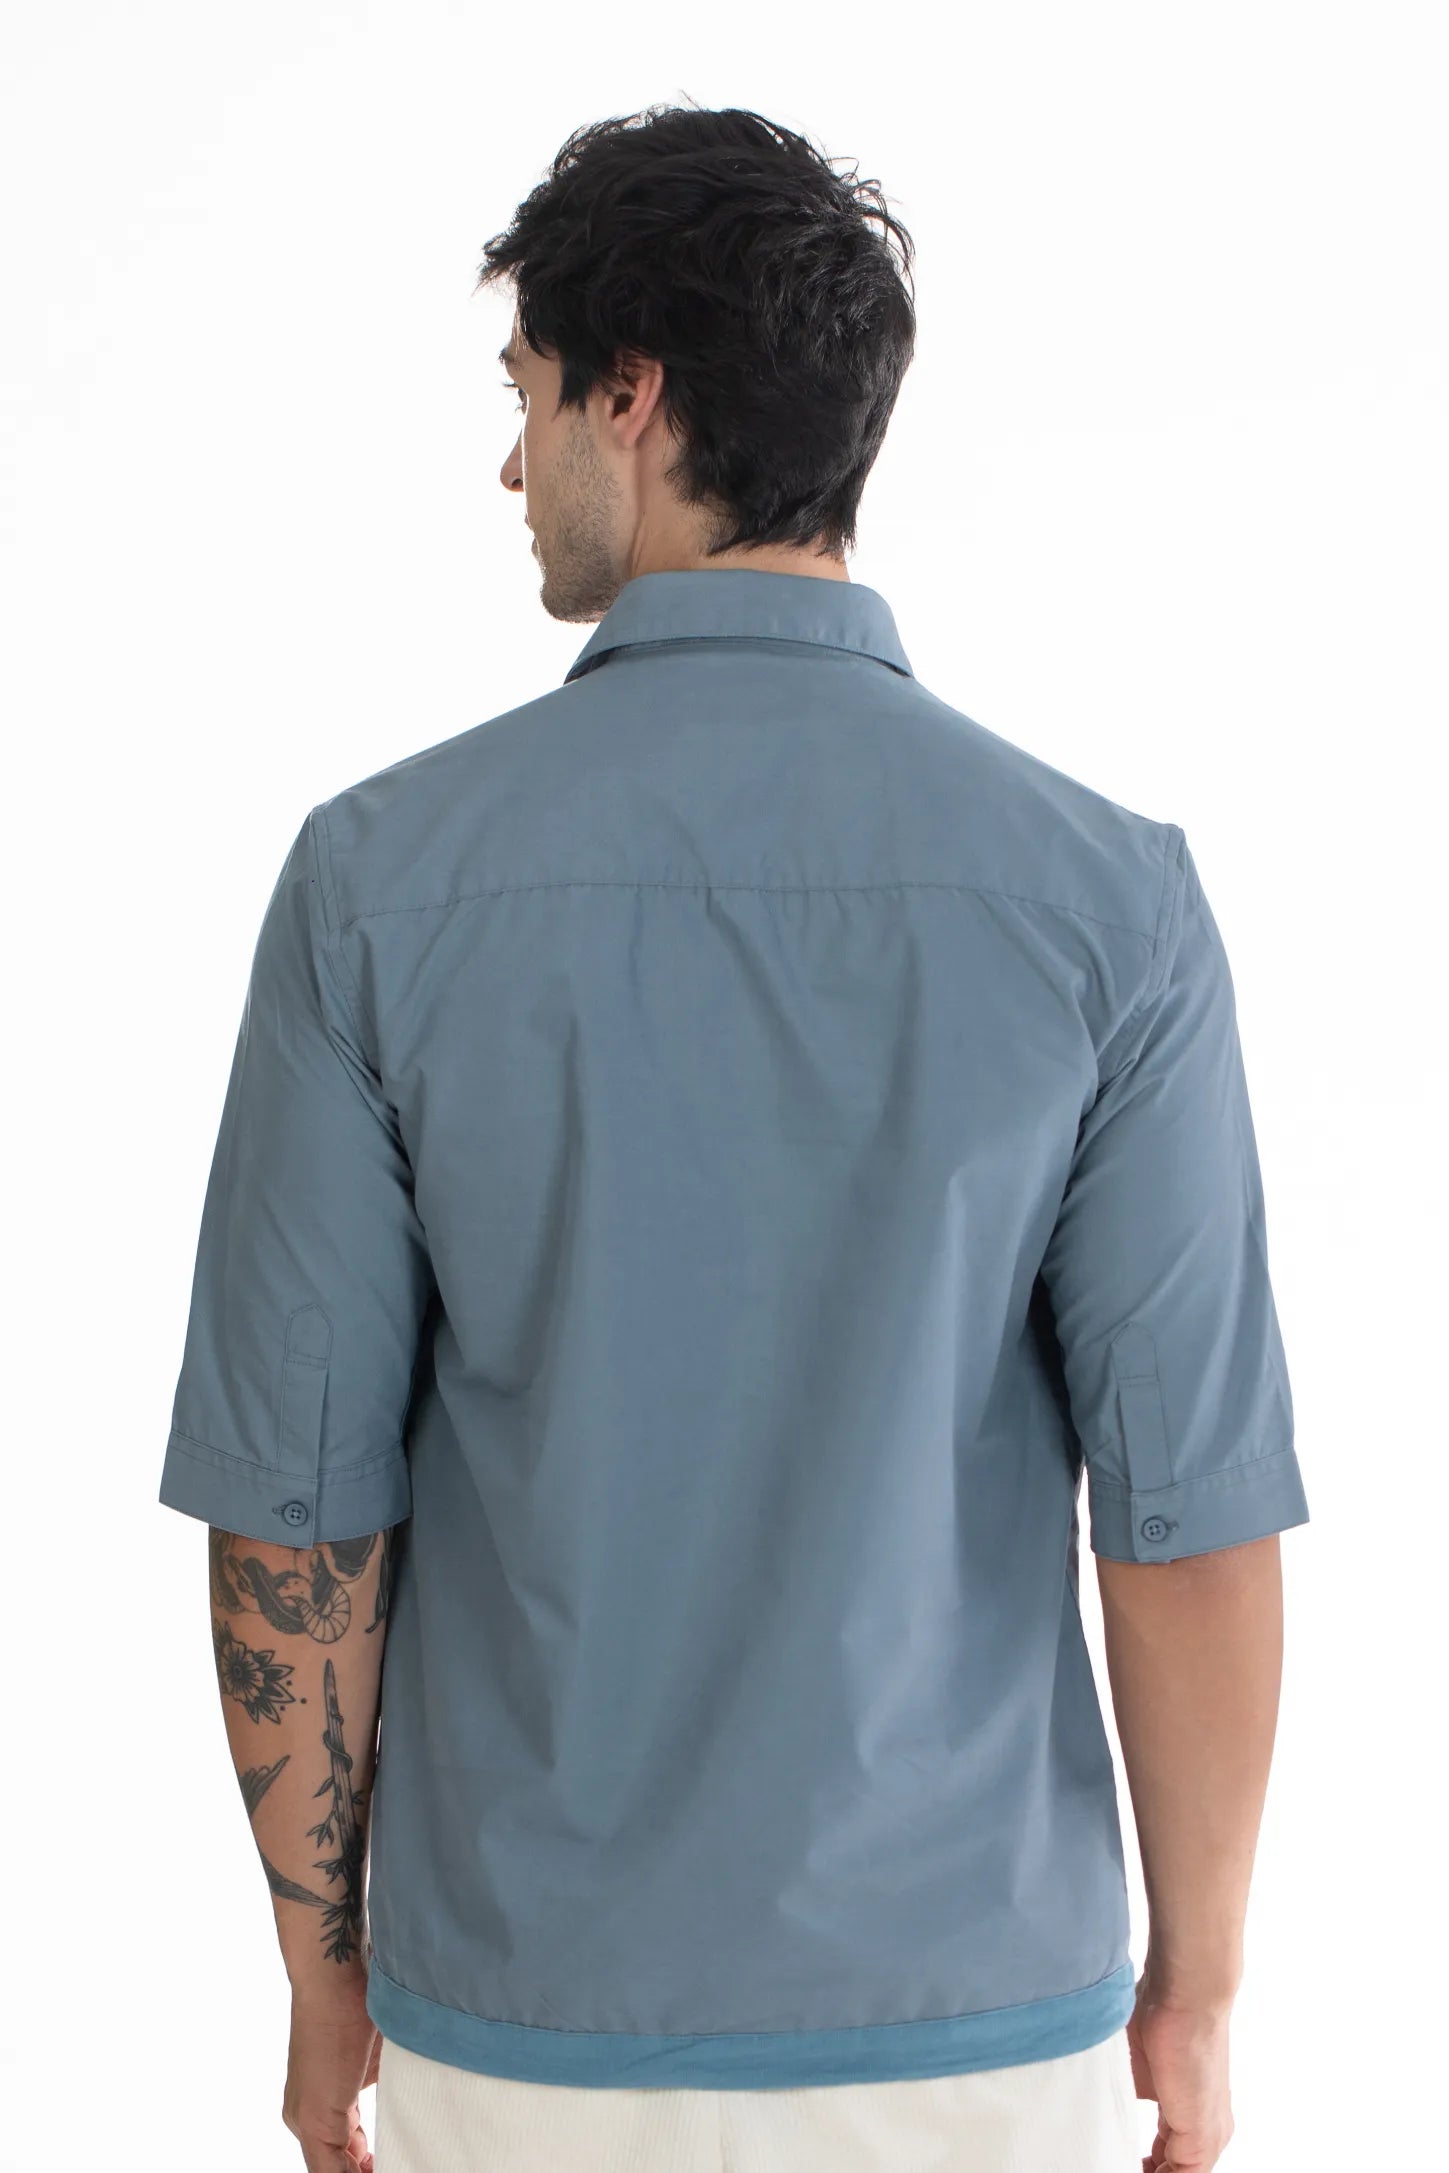 Buy Five Sleeve Adjustable Cord Plain Shirt Online.